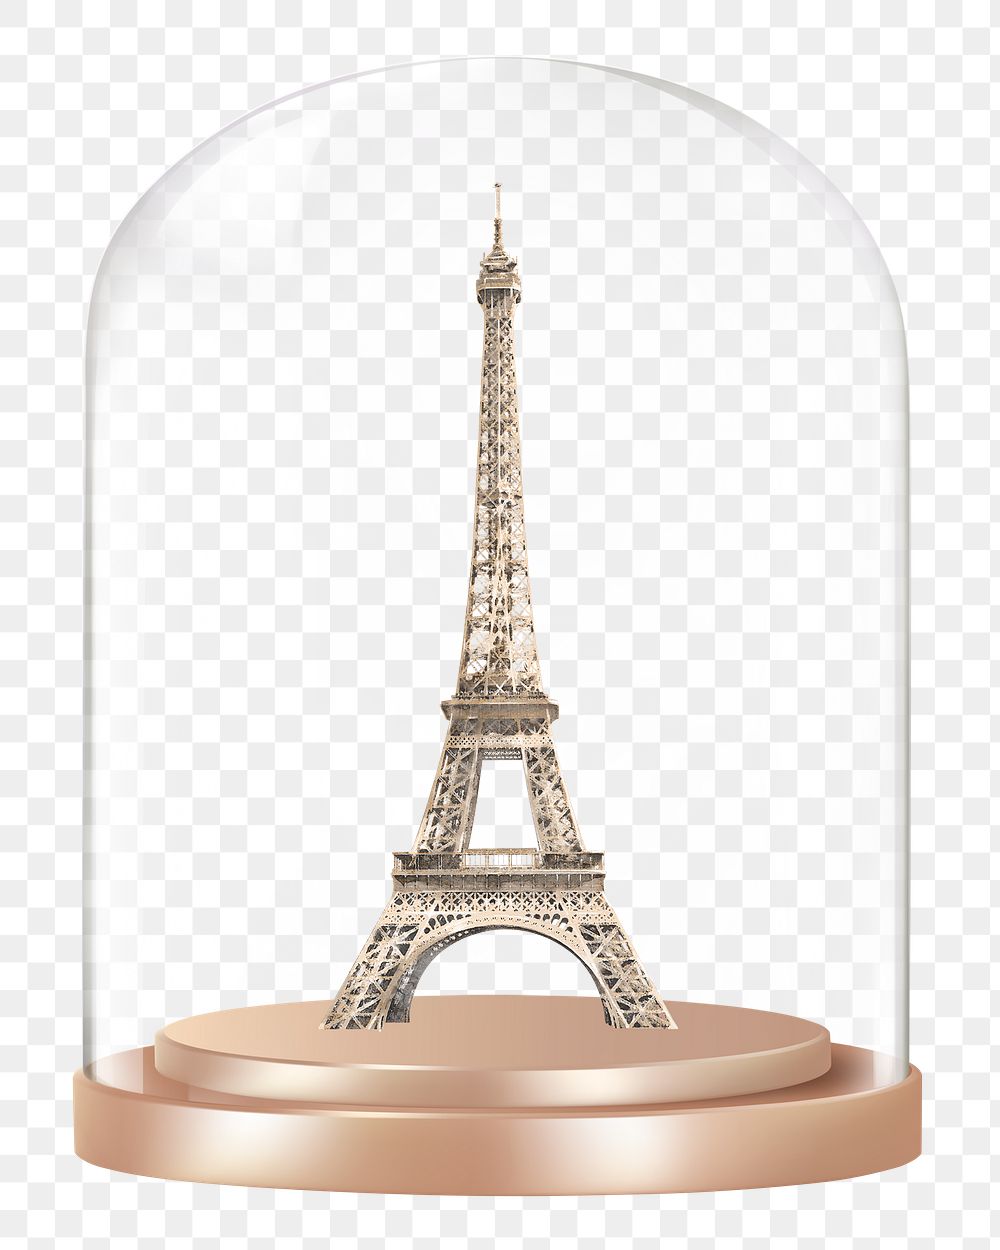 Eiffel Tower png glass dome sticker, Paris travel landmark concept art, transparent background